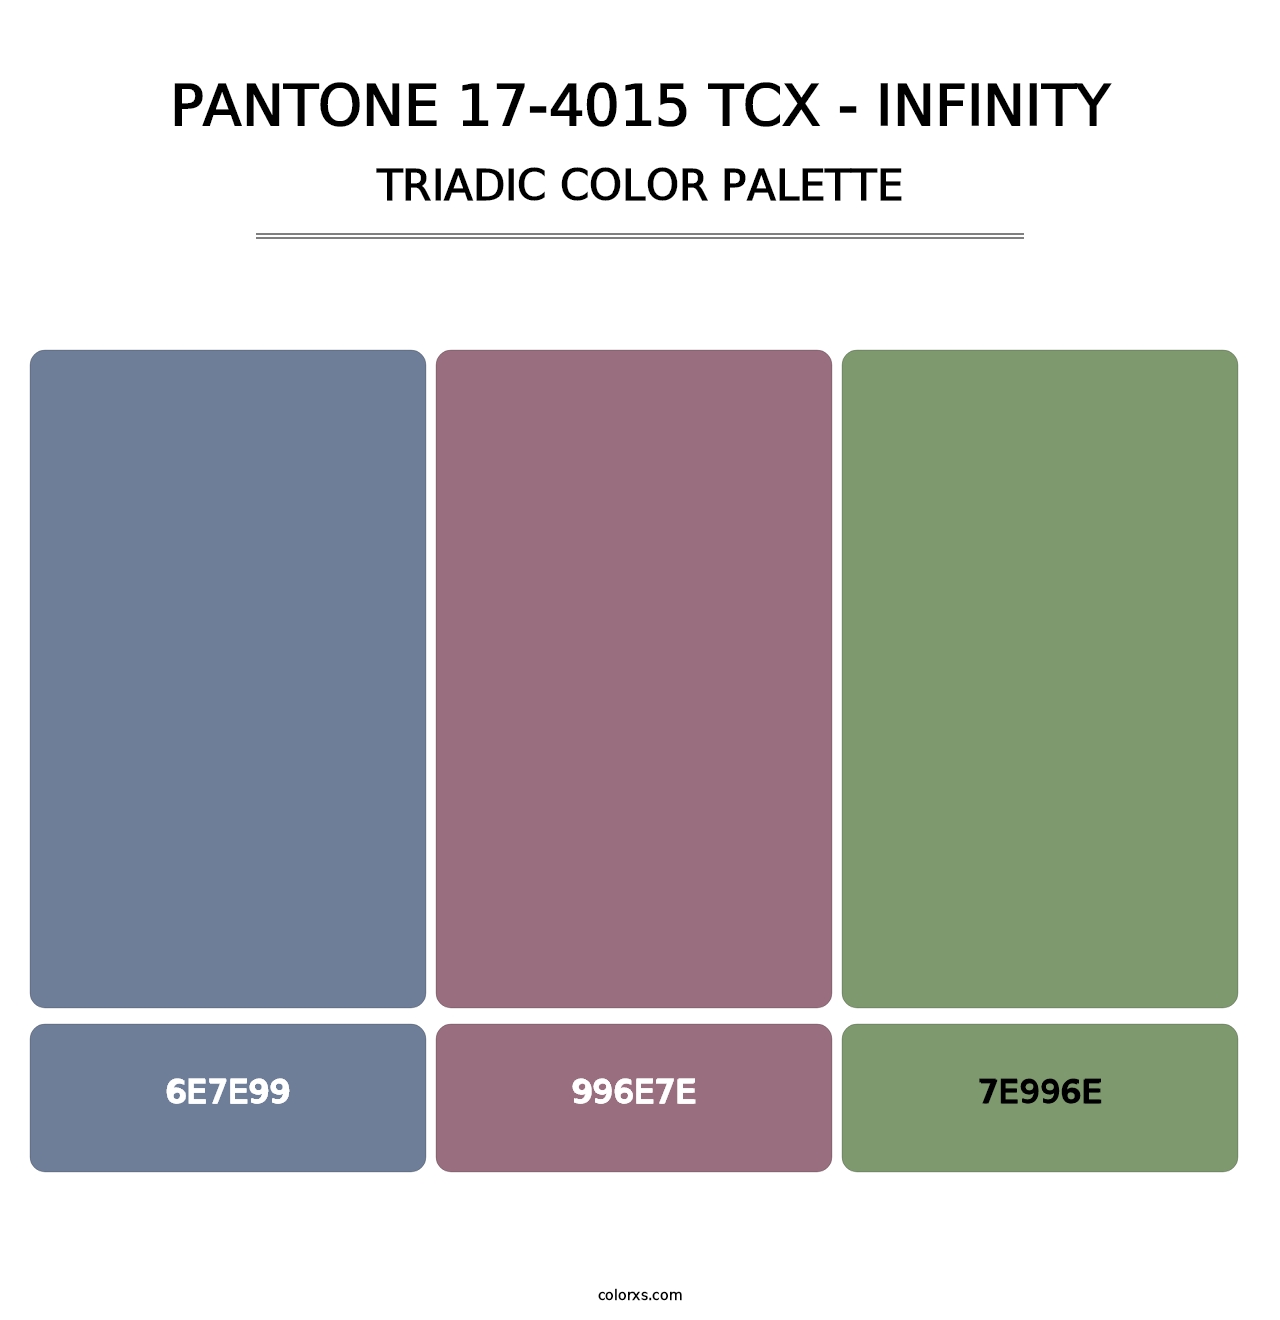 PANTONE 17-4015 TCX - Infinity - Triadic Color Palette